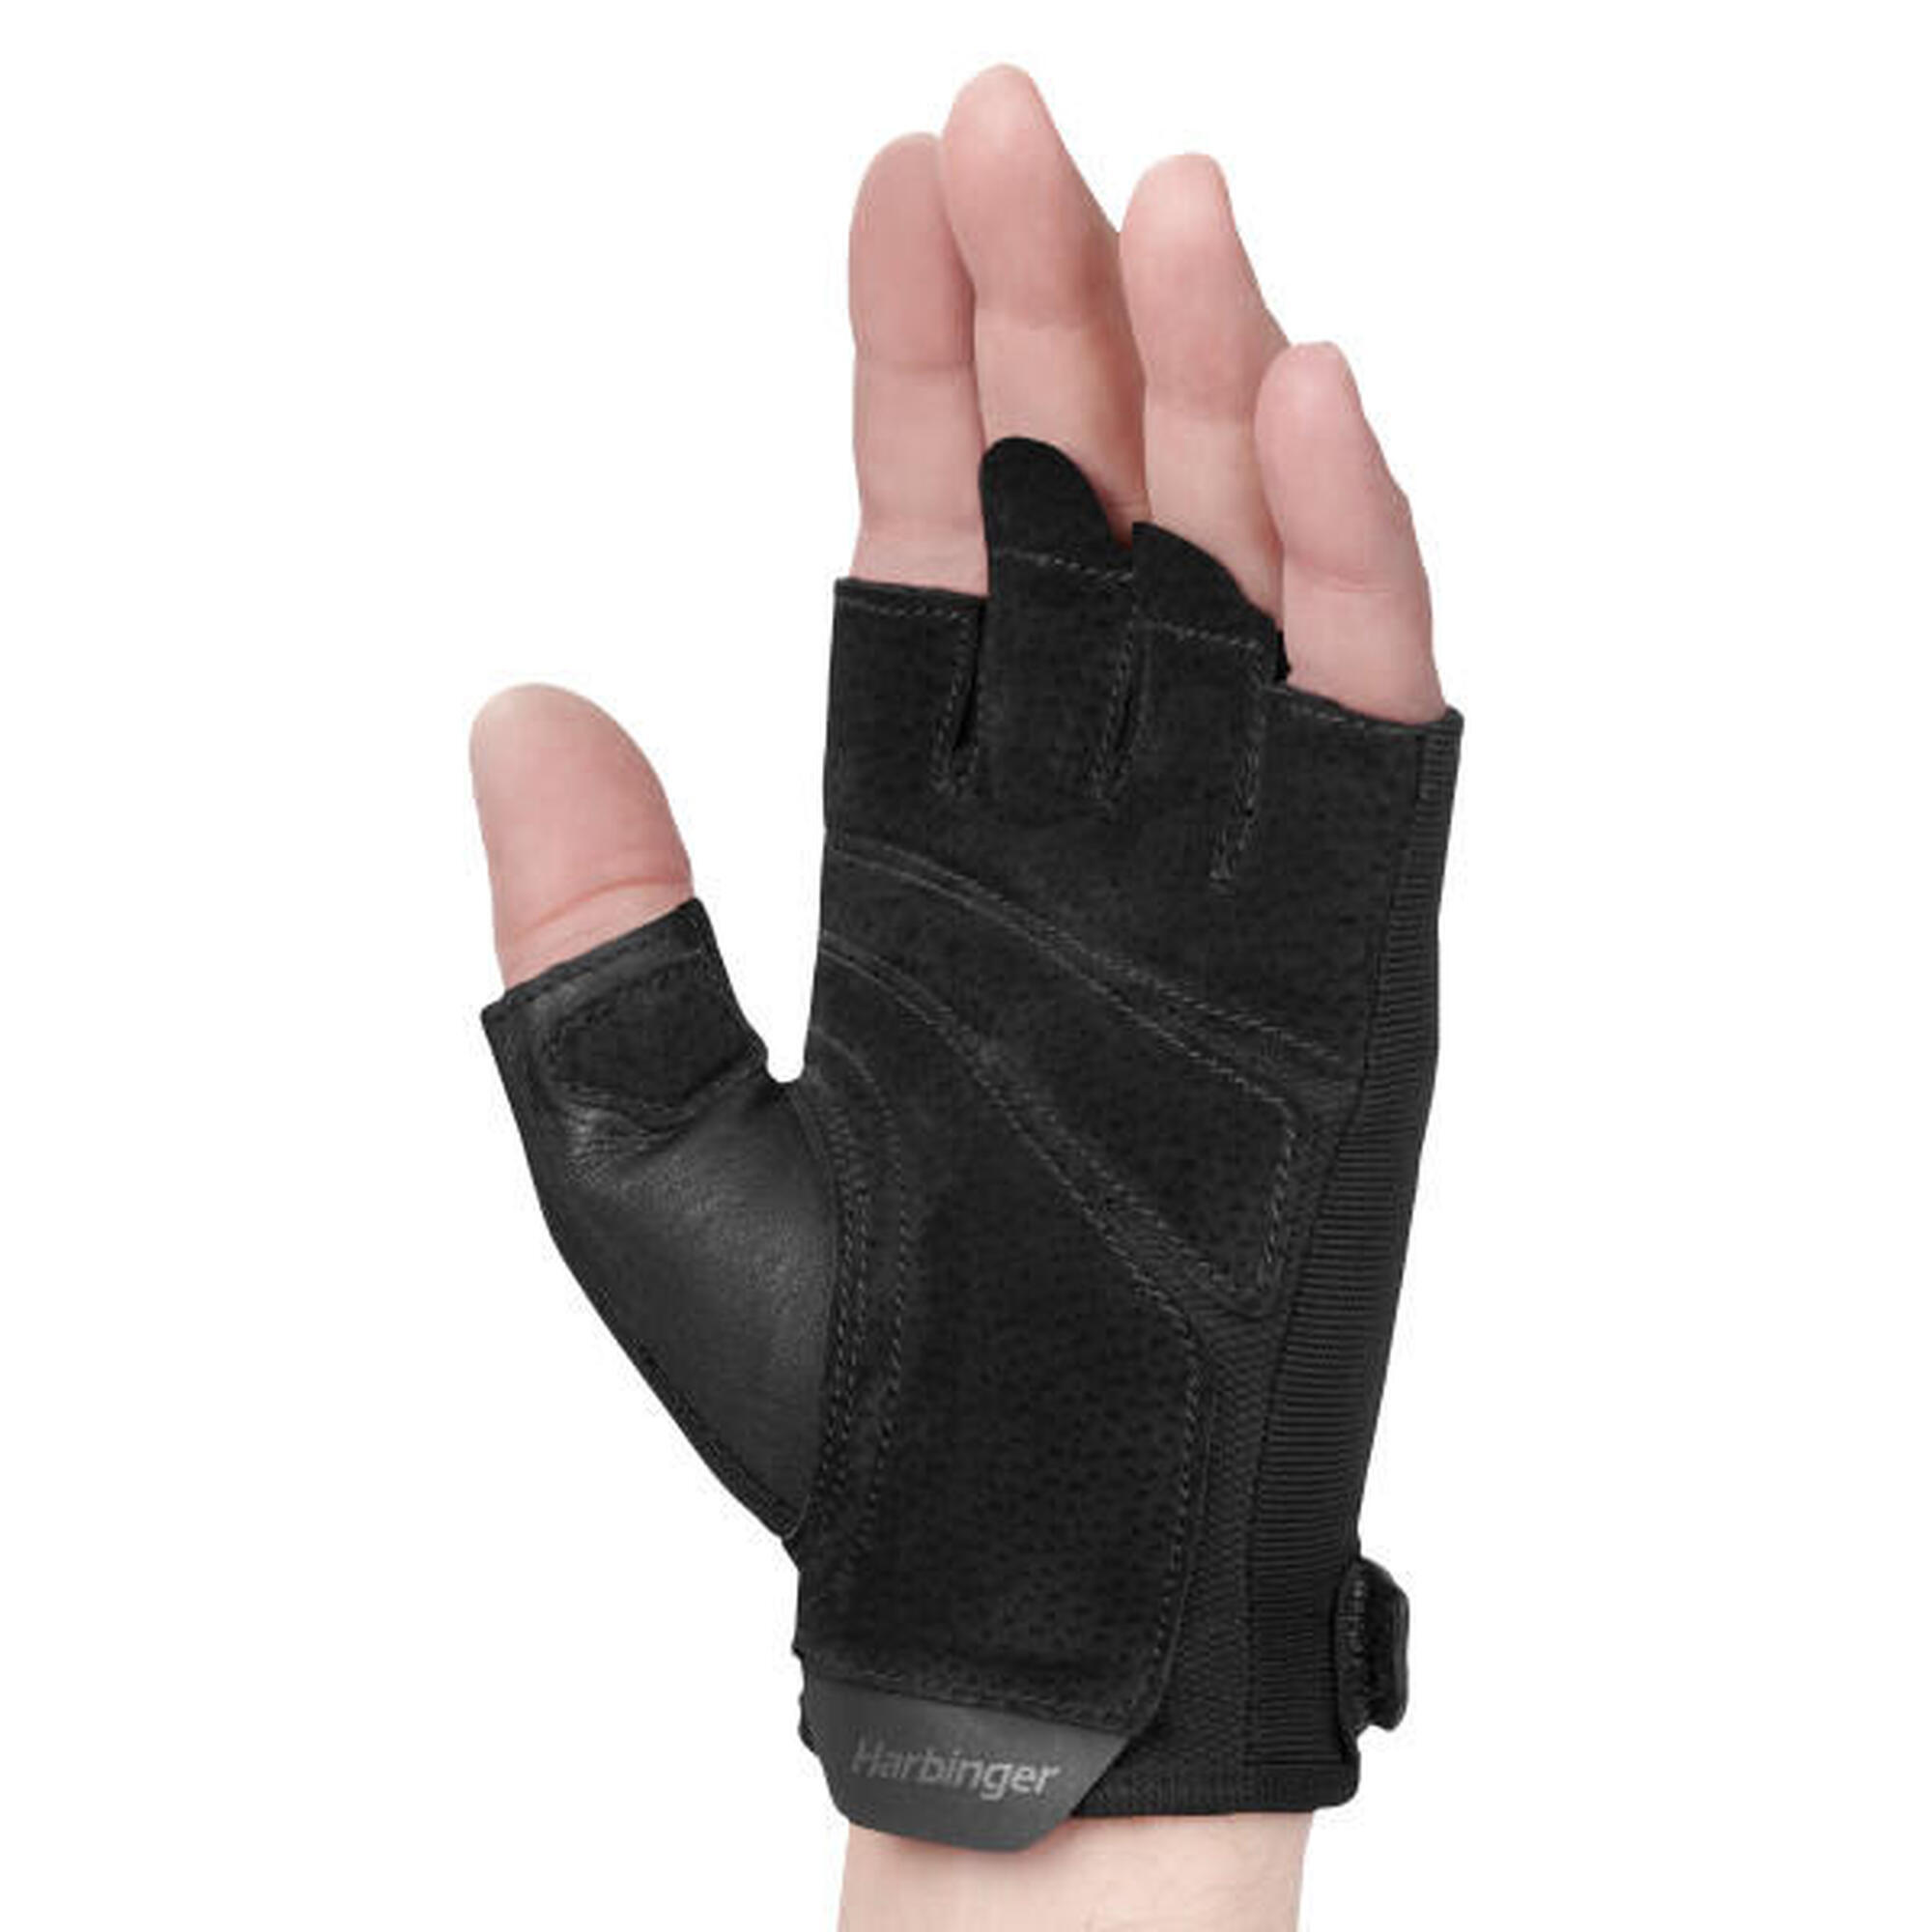 Harbinger Power Handschuhe: Fester Griff, optimaler Komfort. Größe M - Schwarz